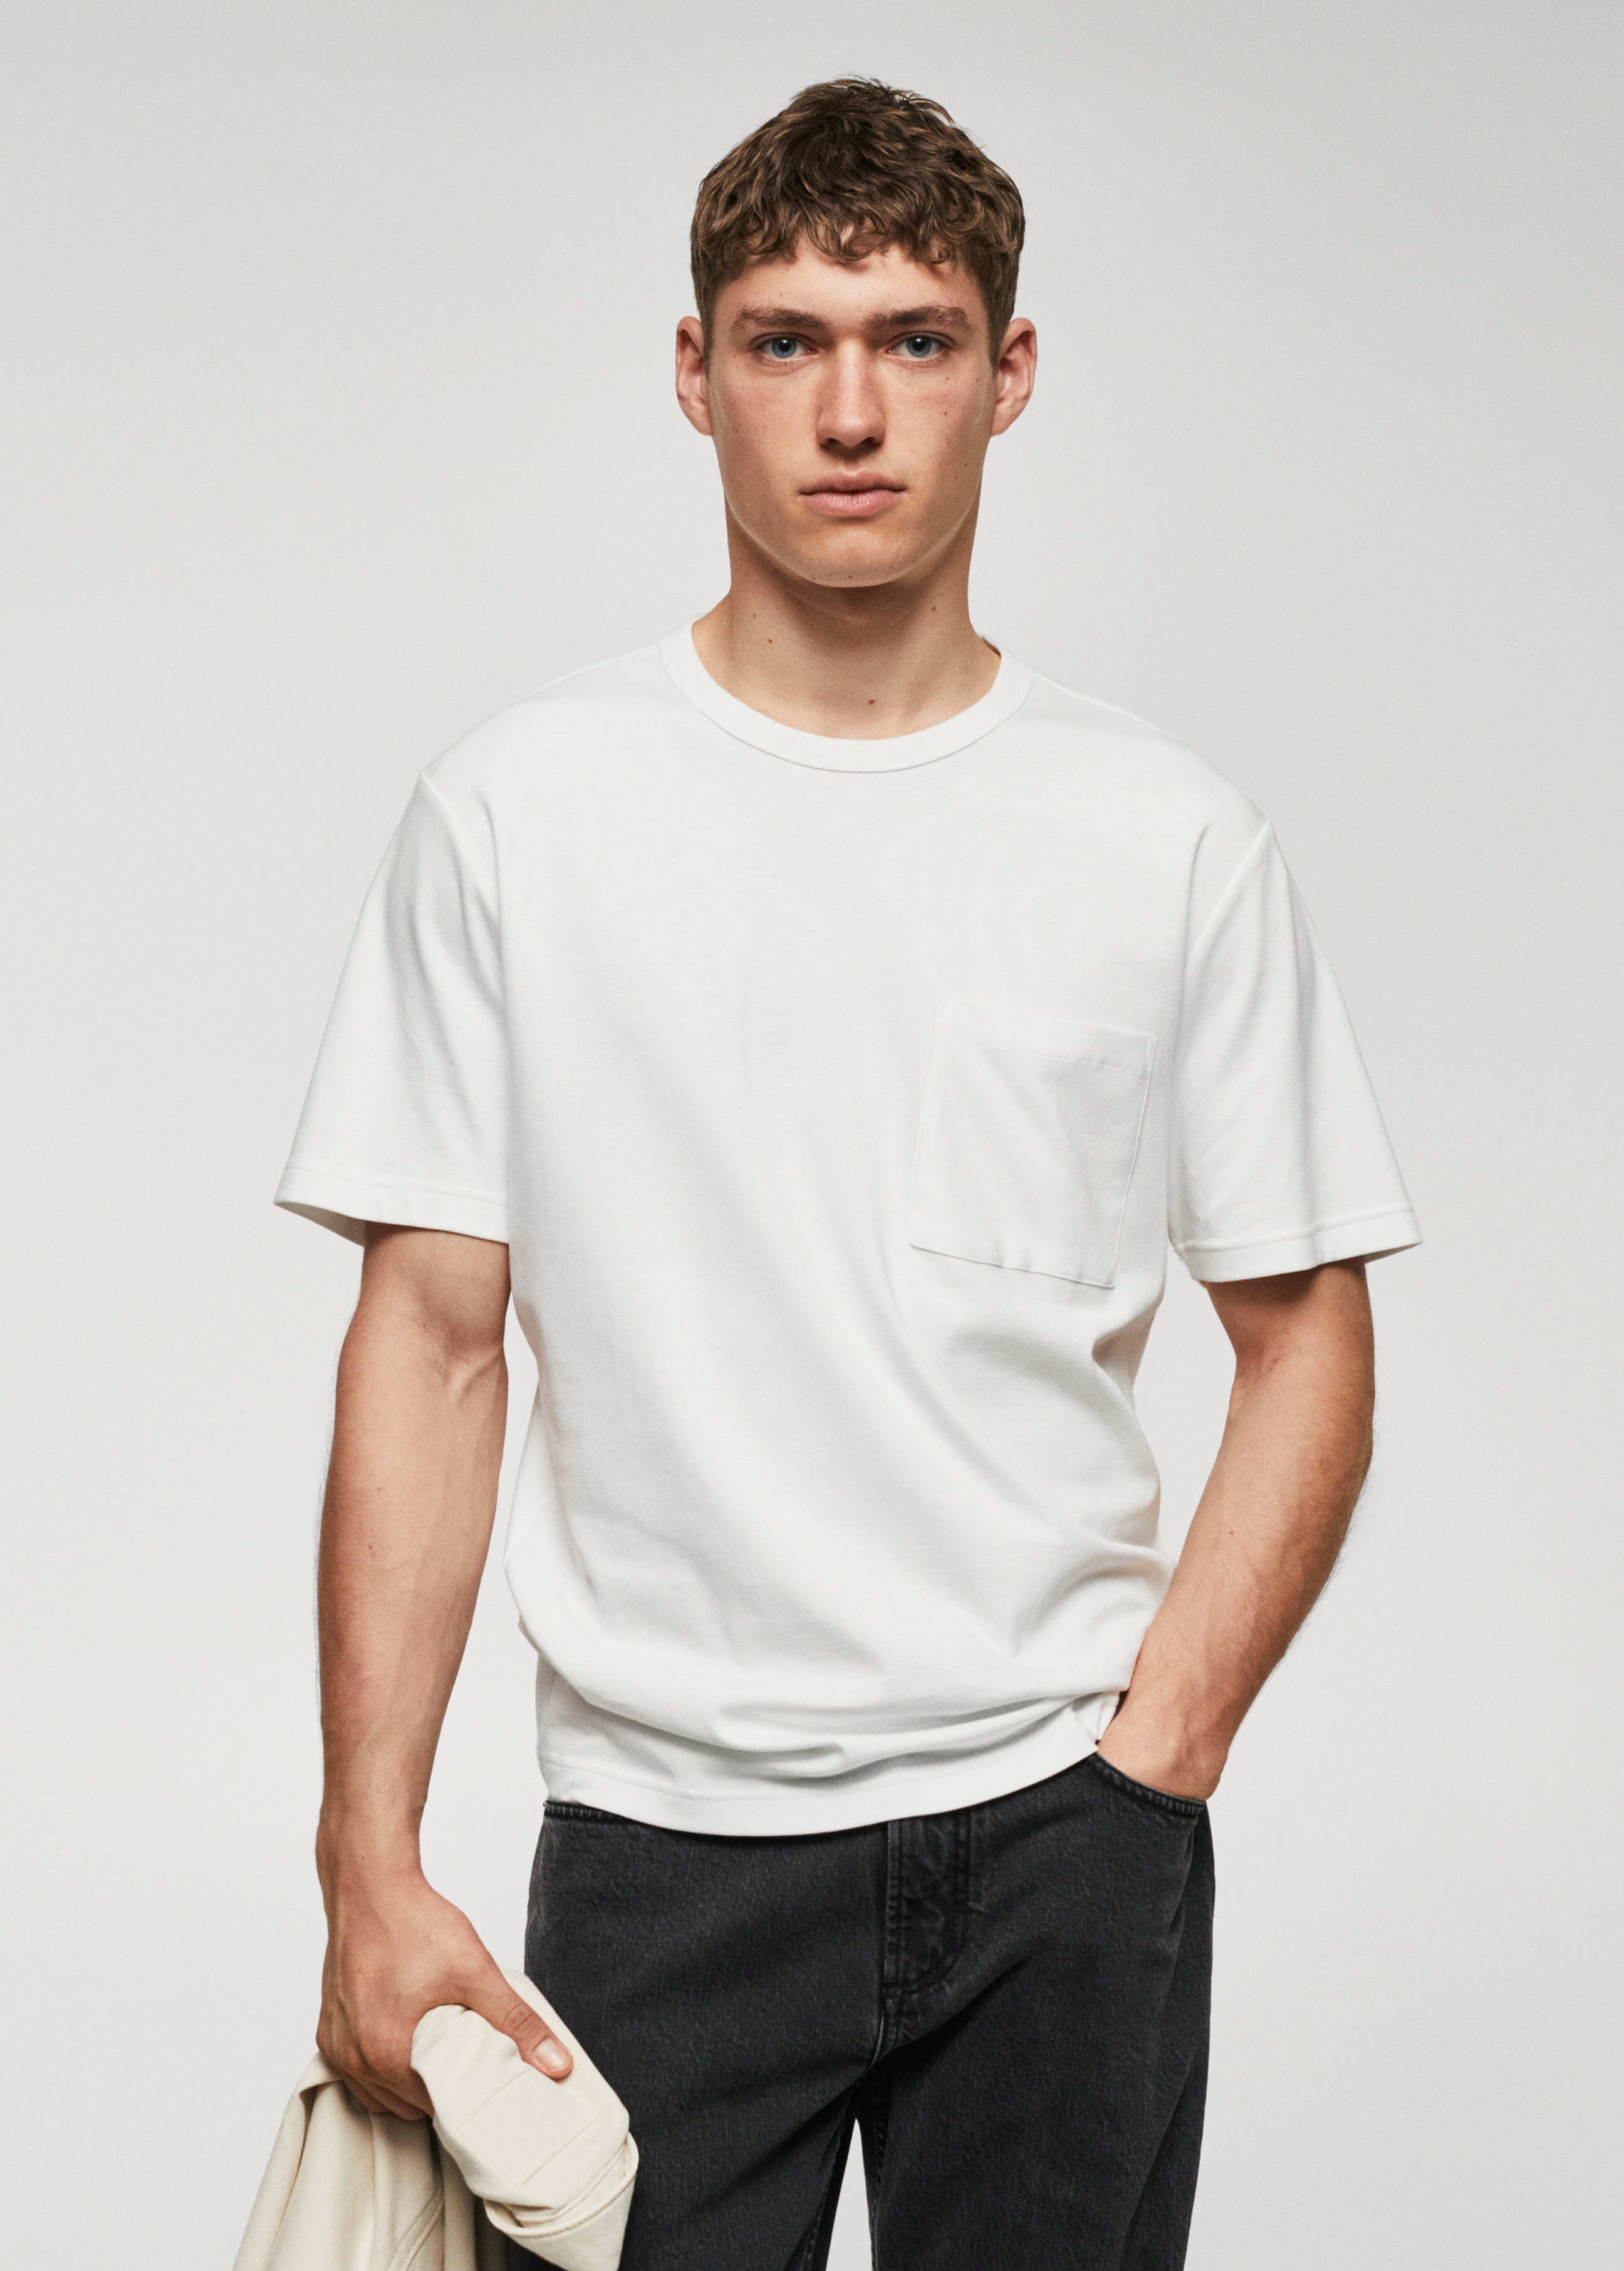 100% cotton t-shirt with pocket - Medium plane